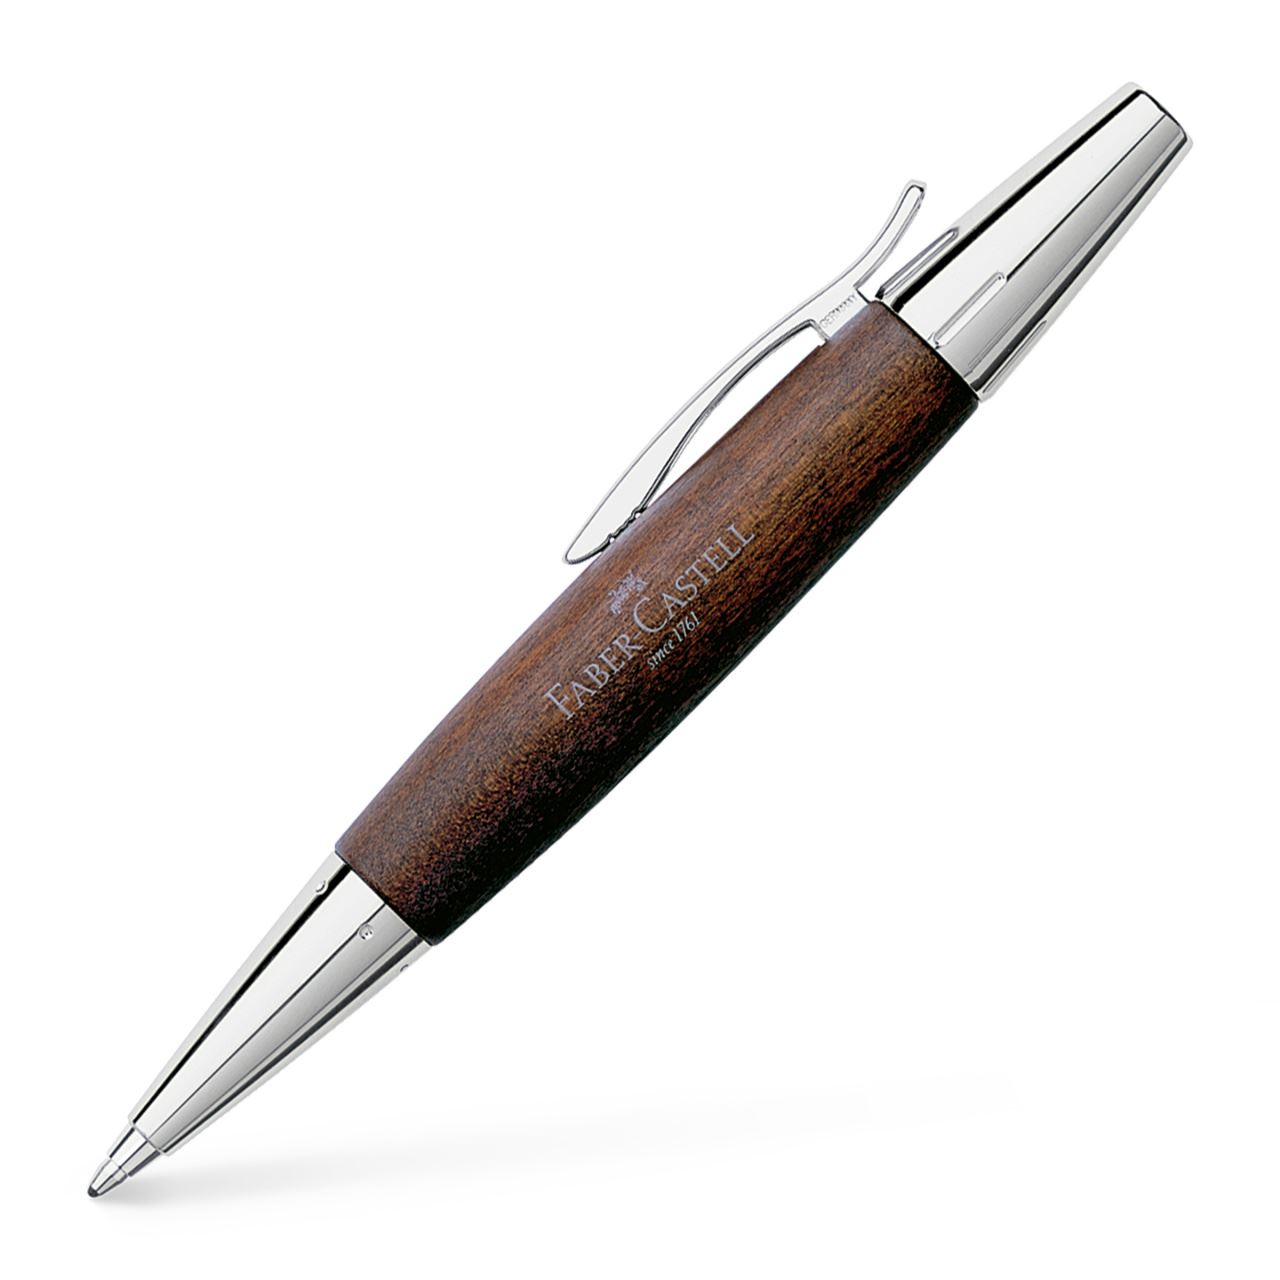 Faber-Castell - Στυλό διαρκείας E-motion Chrome σκούρο καφέ